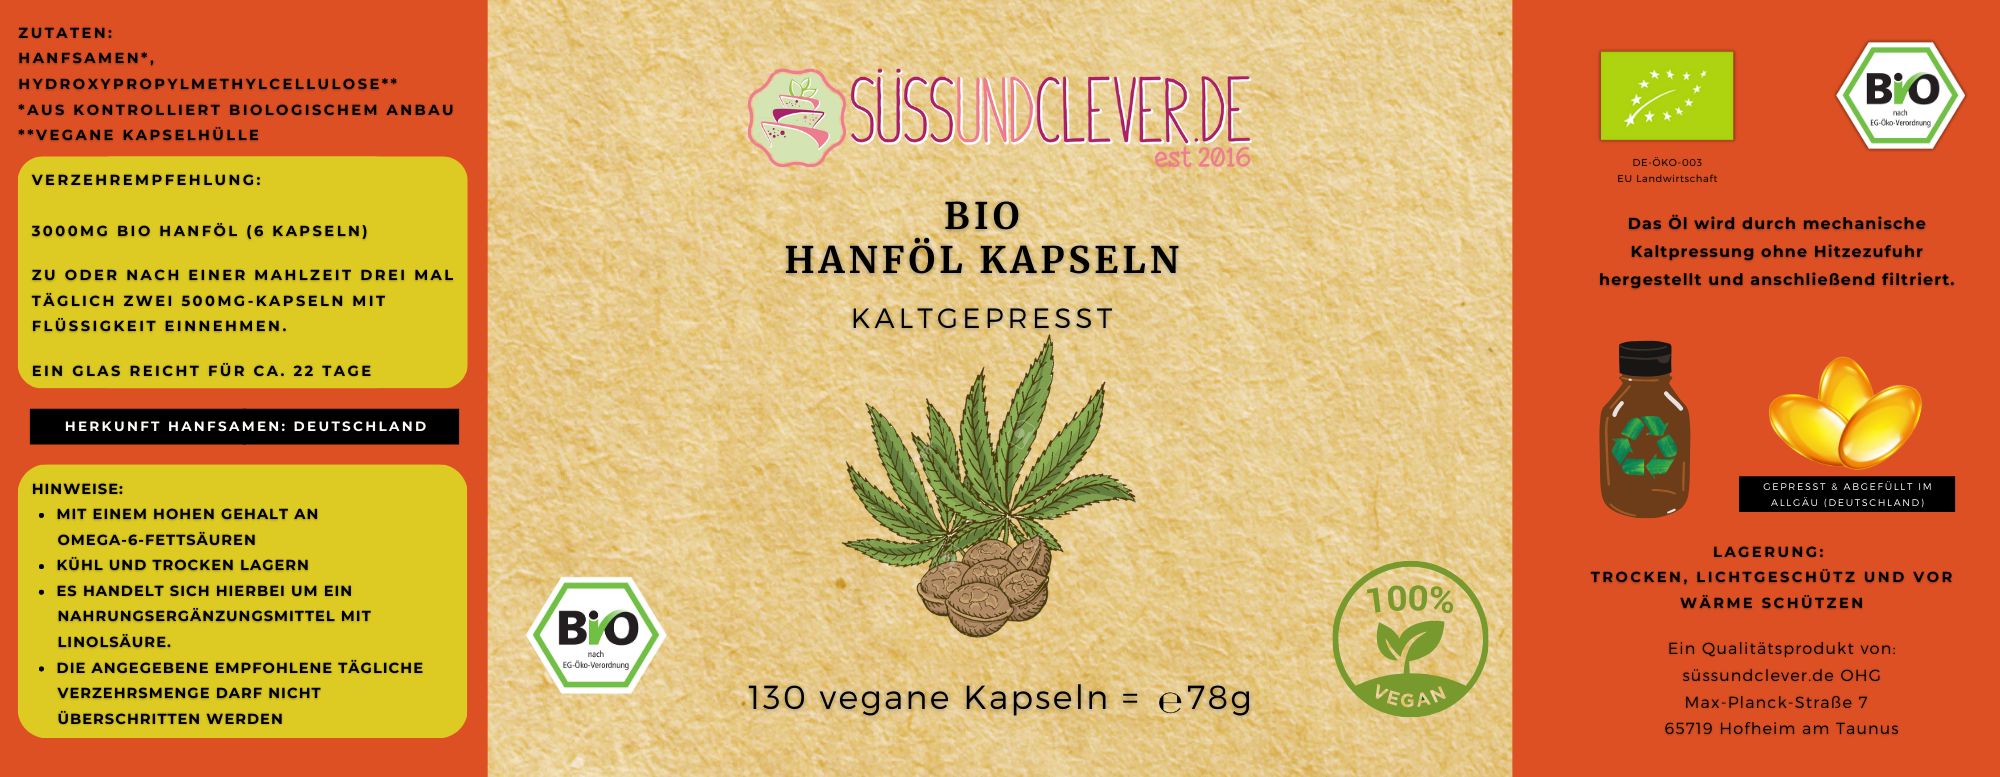 Bio Hanföl Kapseln | kaltgepresst | vegan | 130 vegane Kapseln